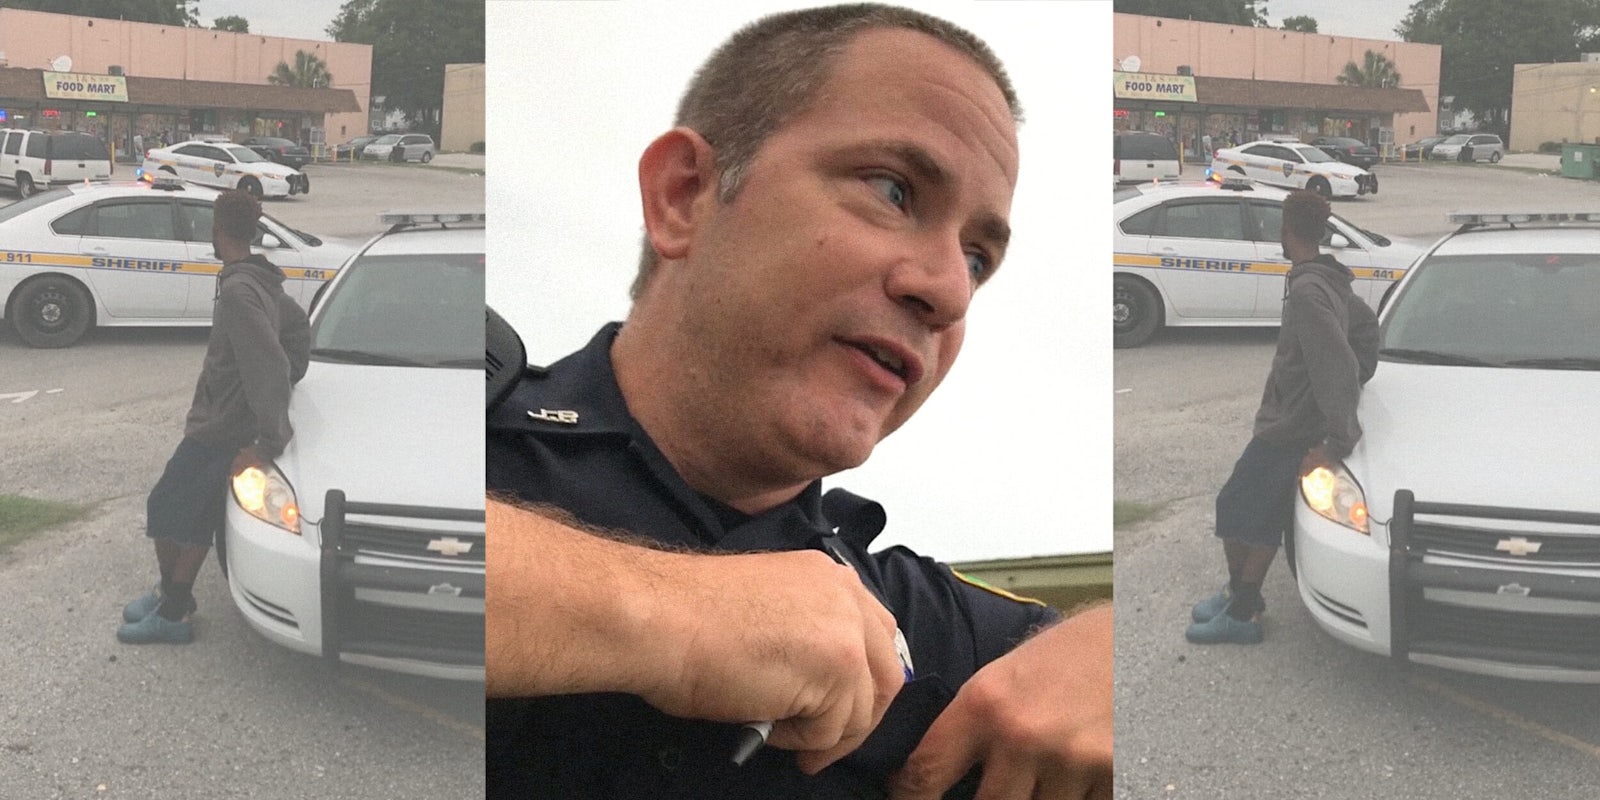 Officer Bolen makes 'crosswalk' arrest with two cars of backup